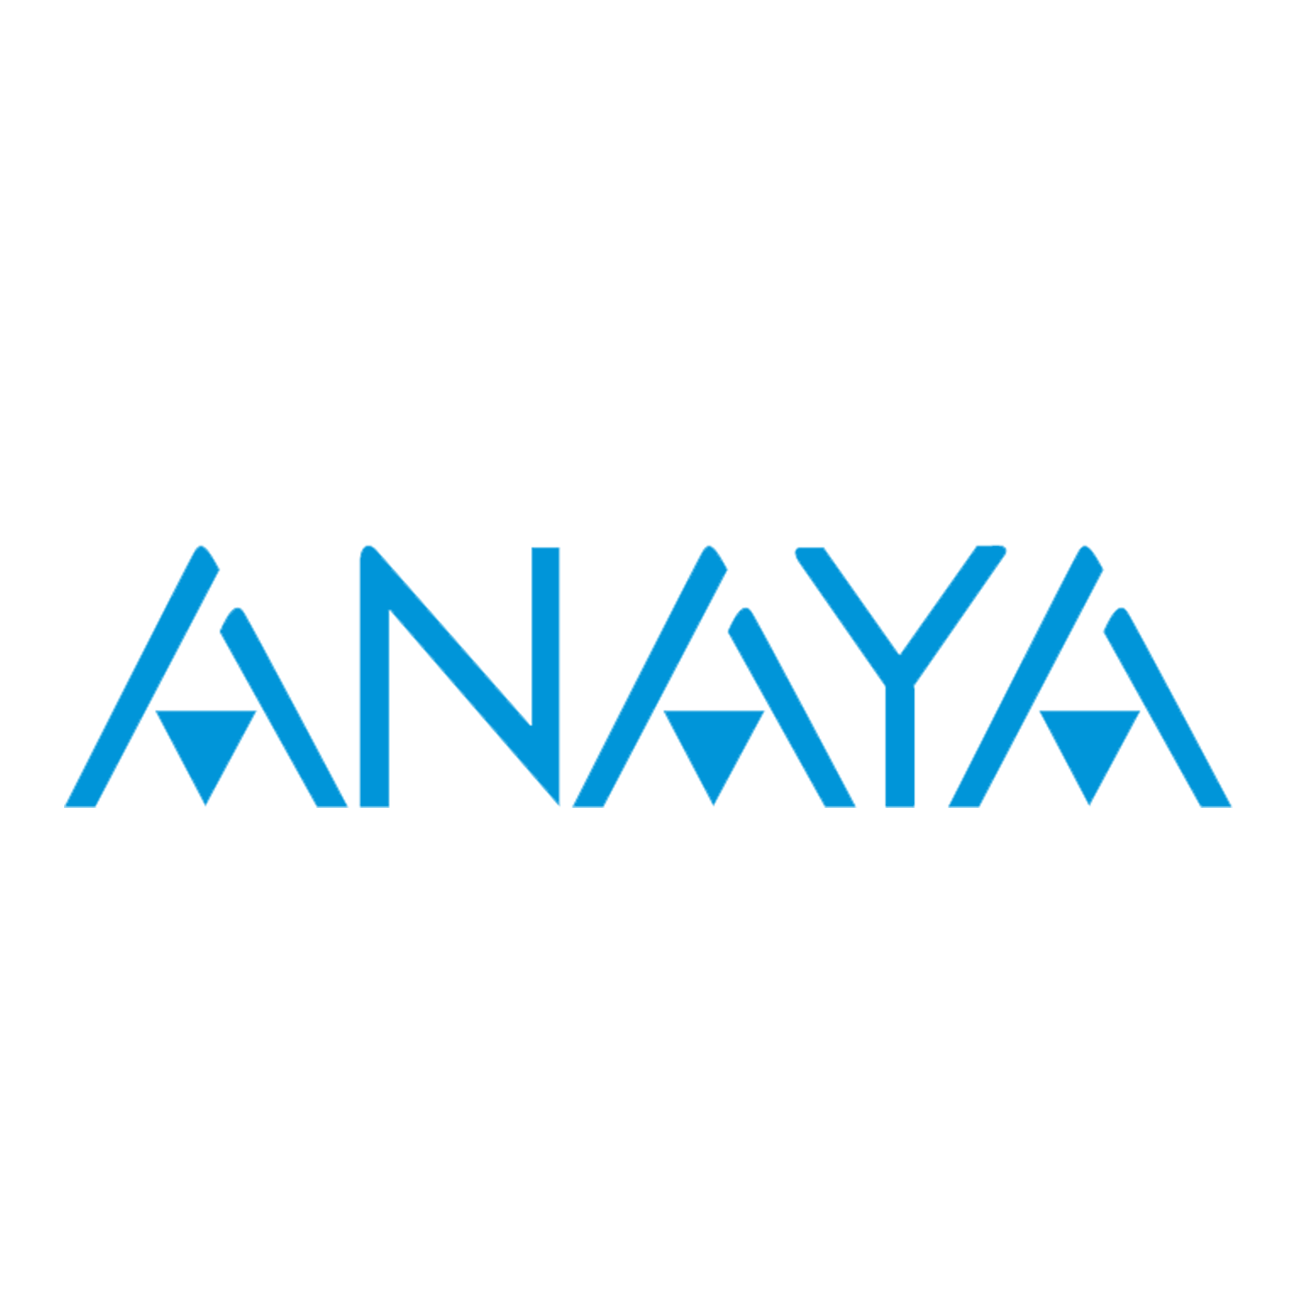 Grupo Anaya